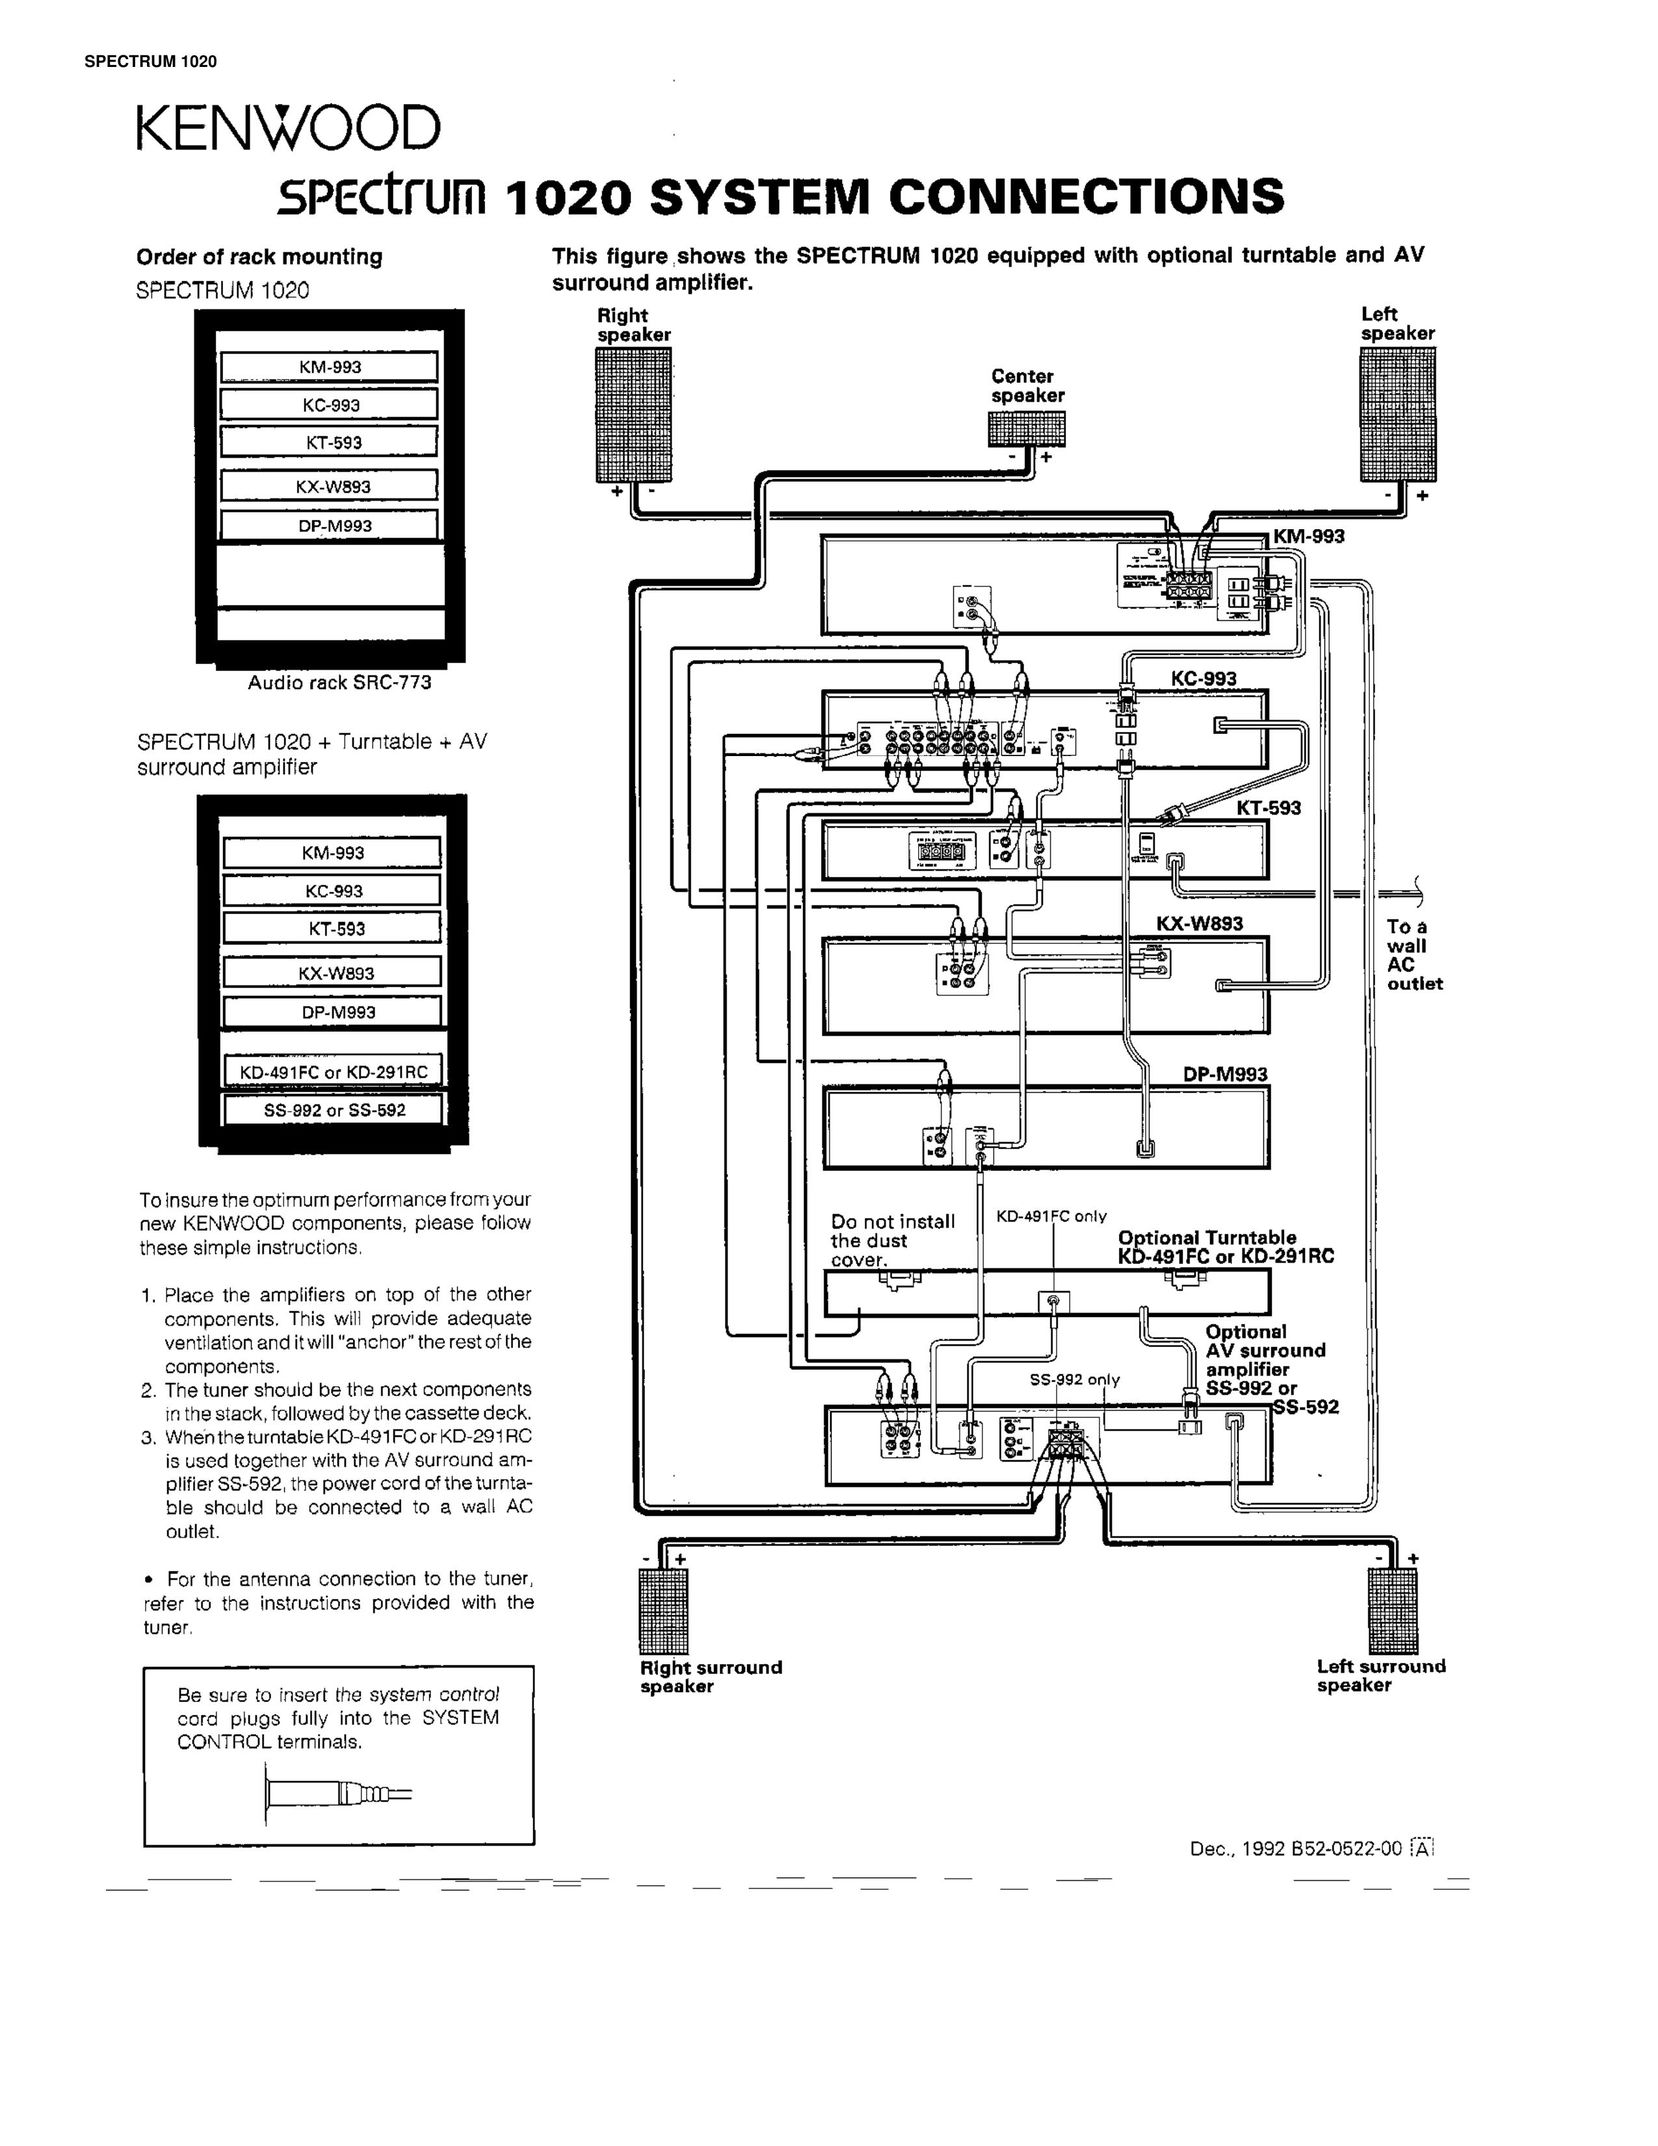 Kenwood DP-M993 Stereo Receiver User Manual